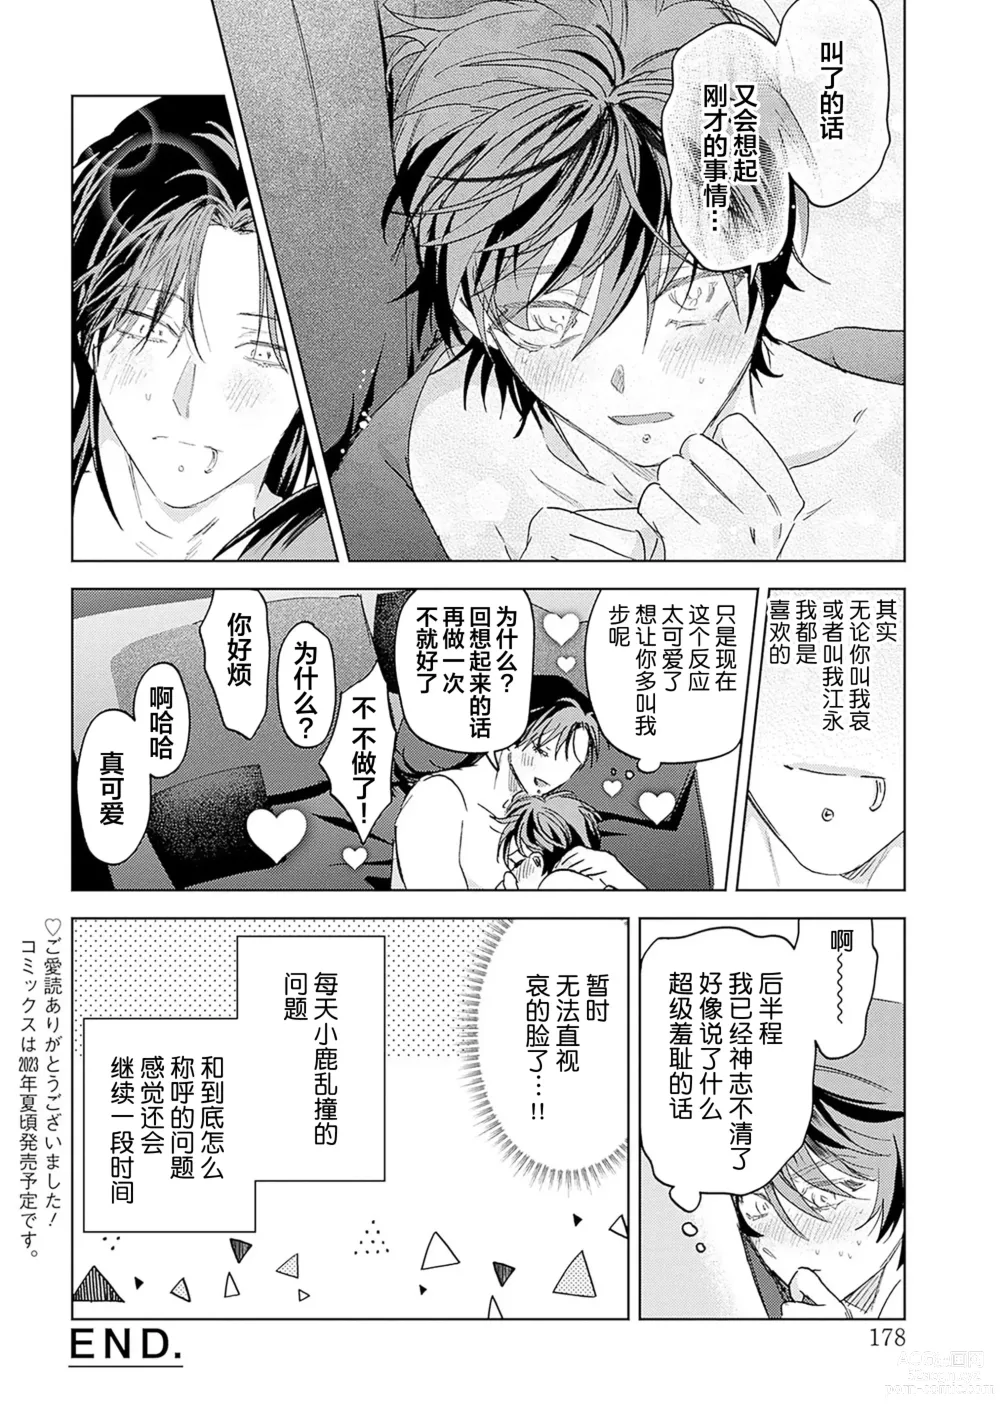 Page 268 of manga 朋克三角